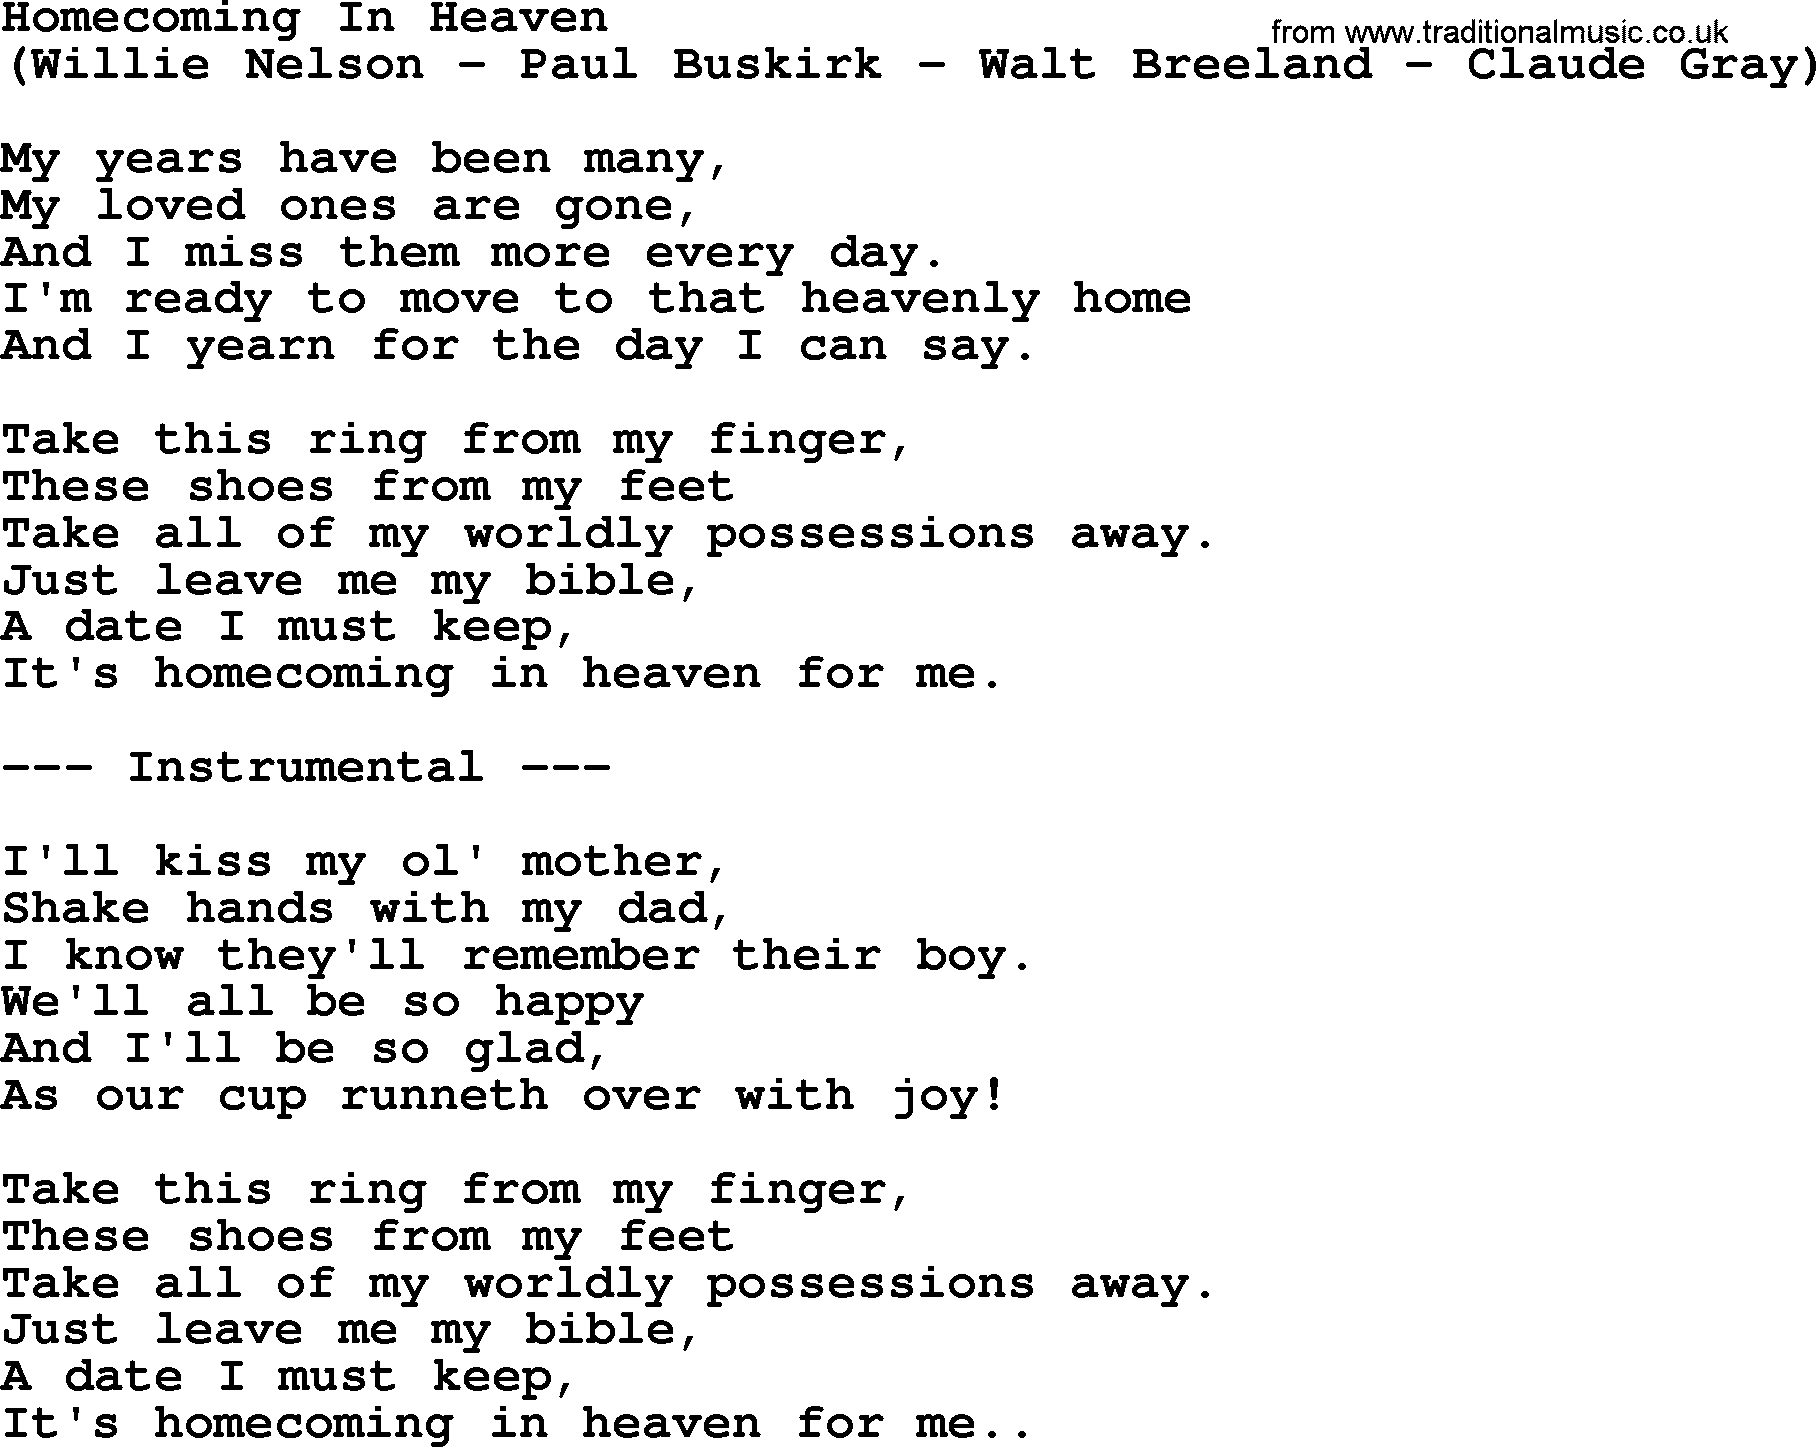 George Jones song: Homecoming In Heaven, lyrics